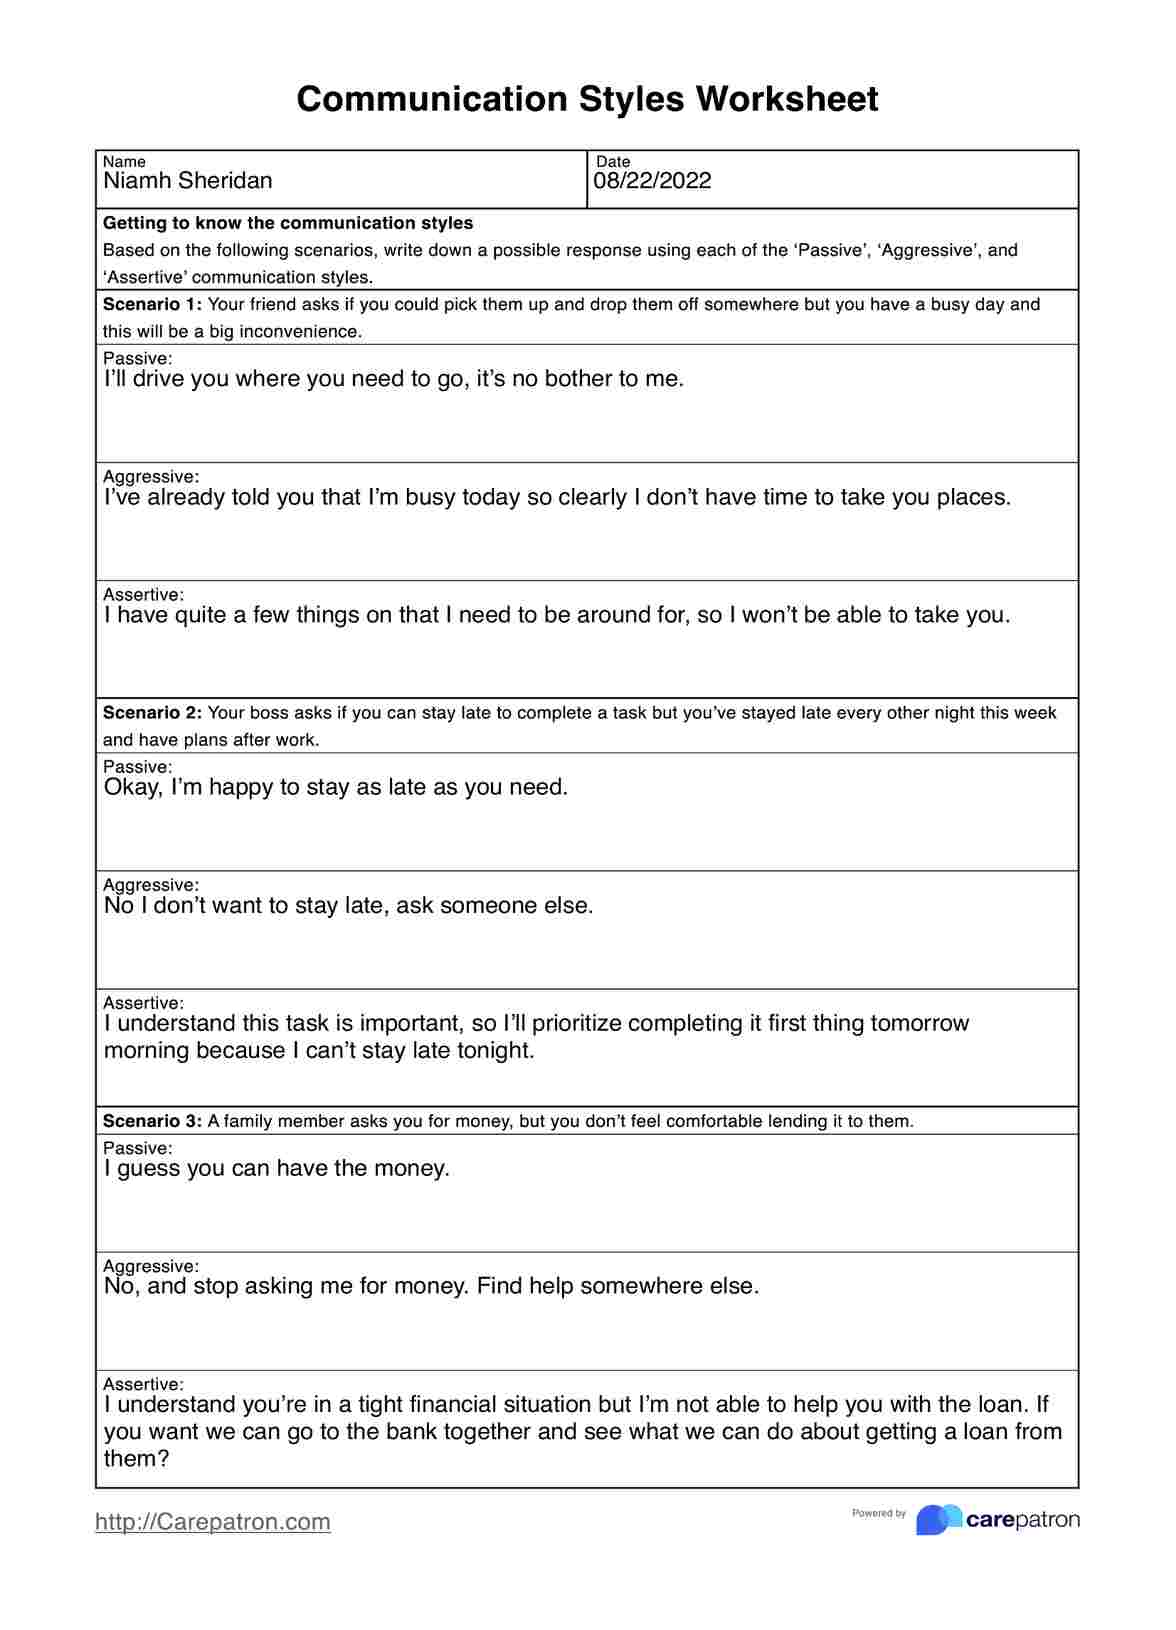 Communication Styles Worksheets PDF Example